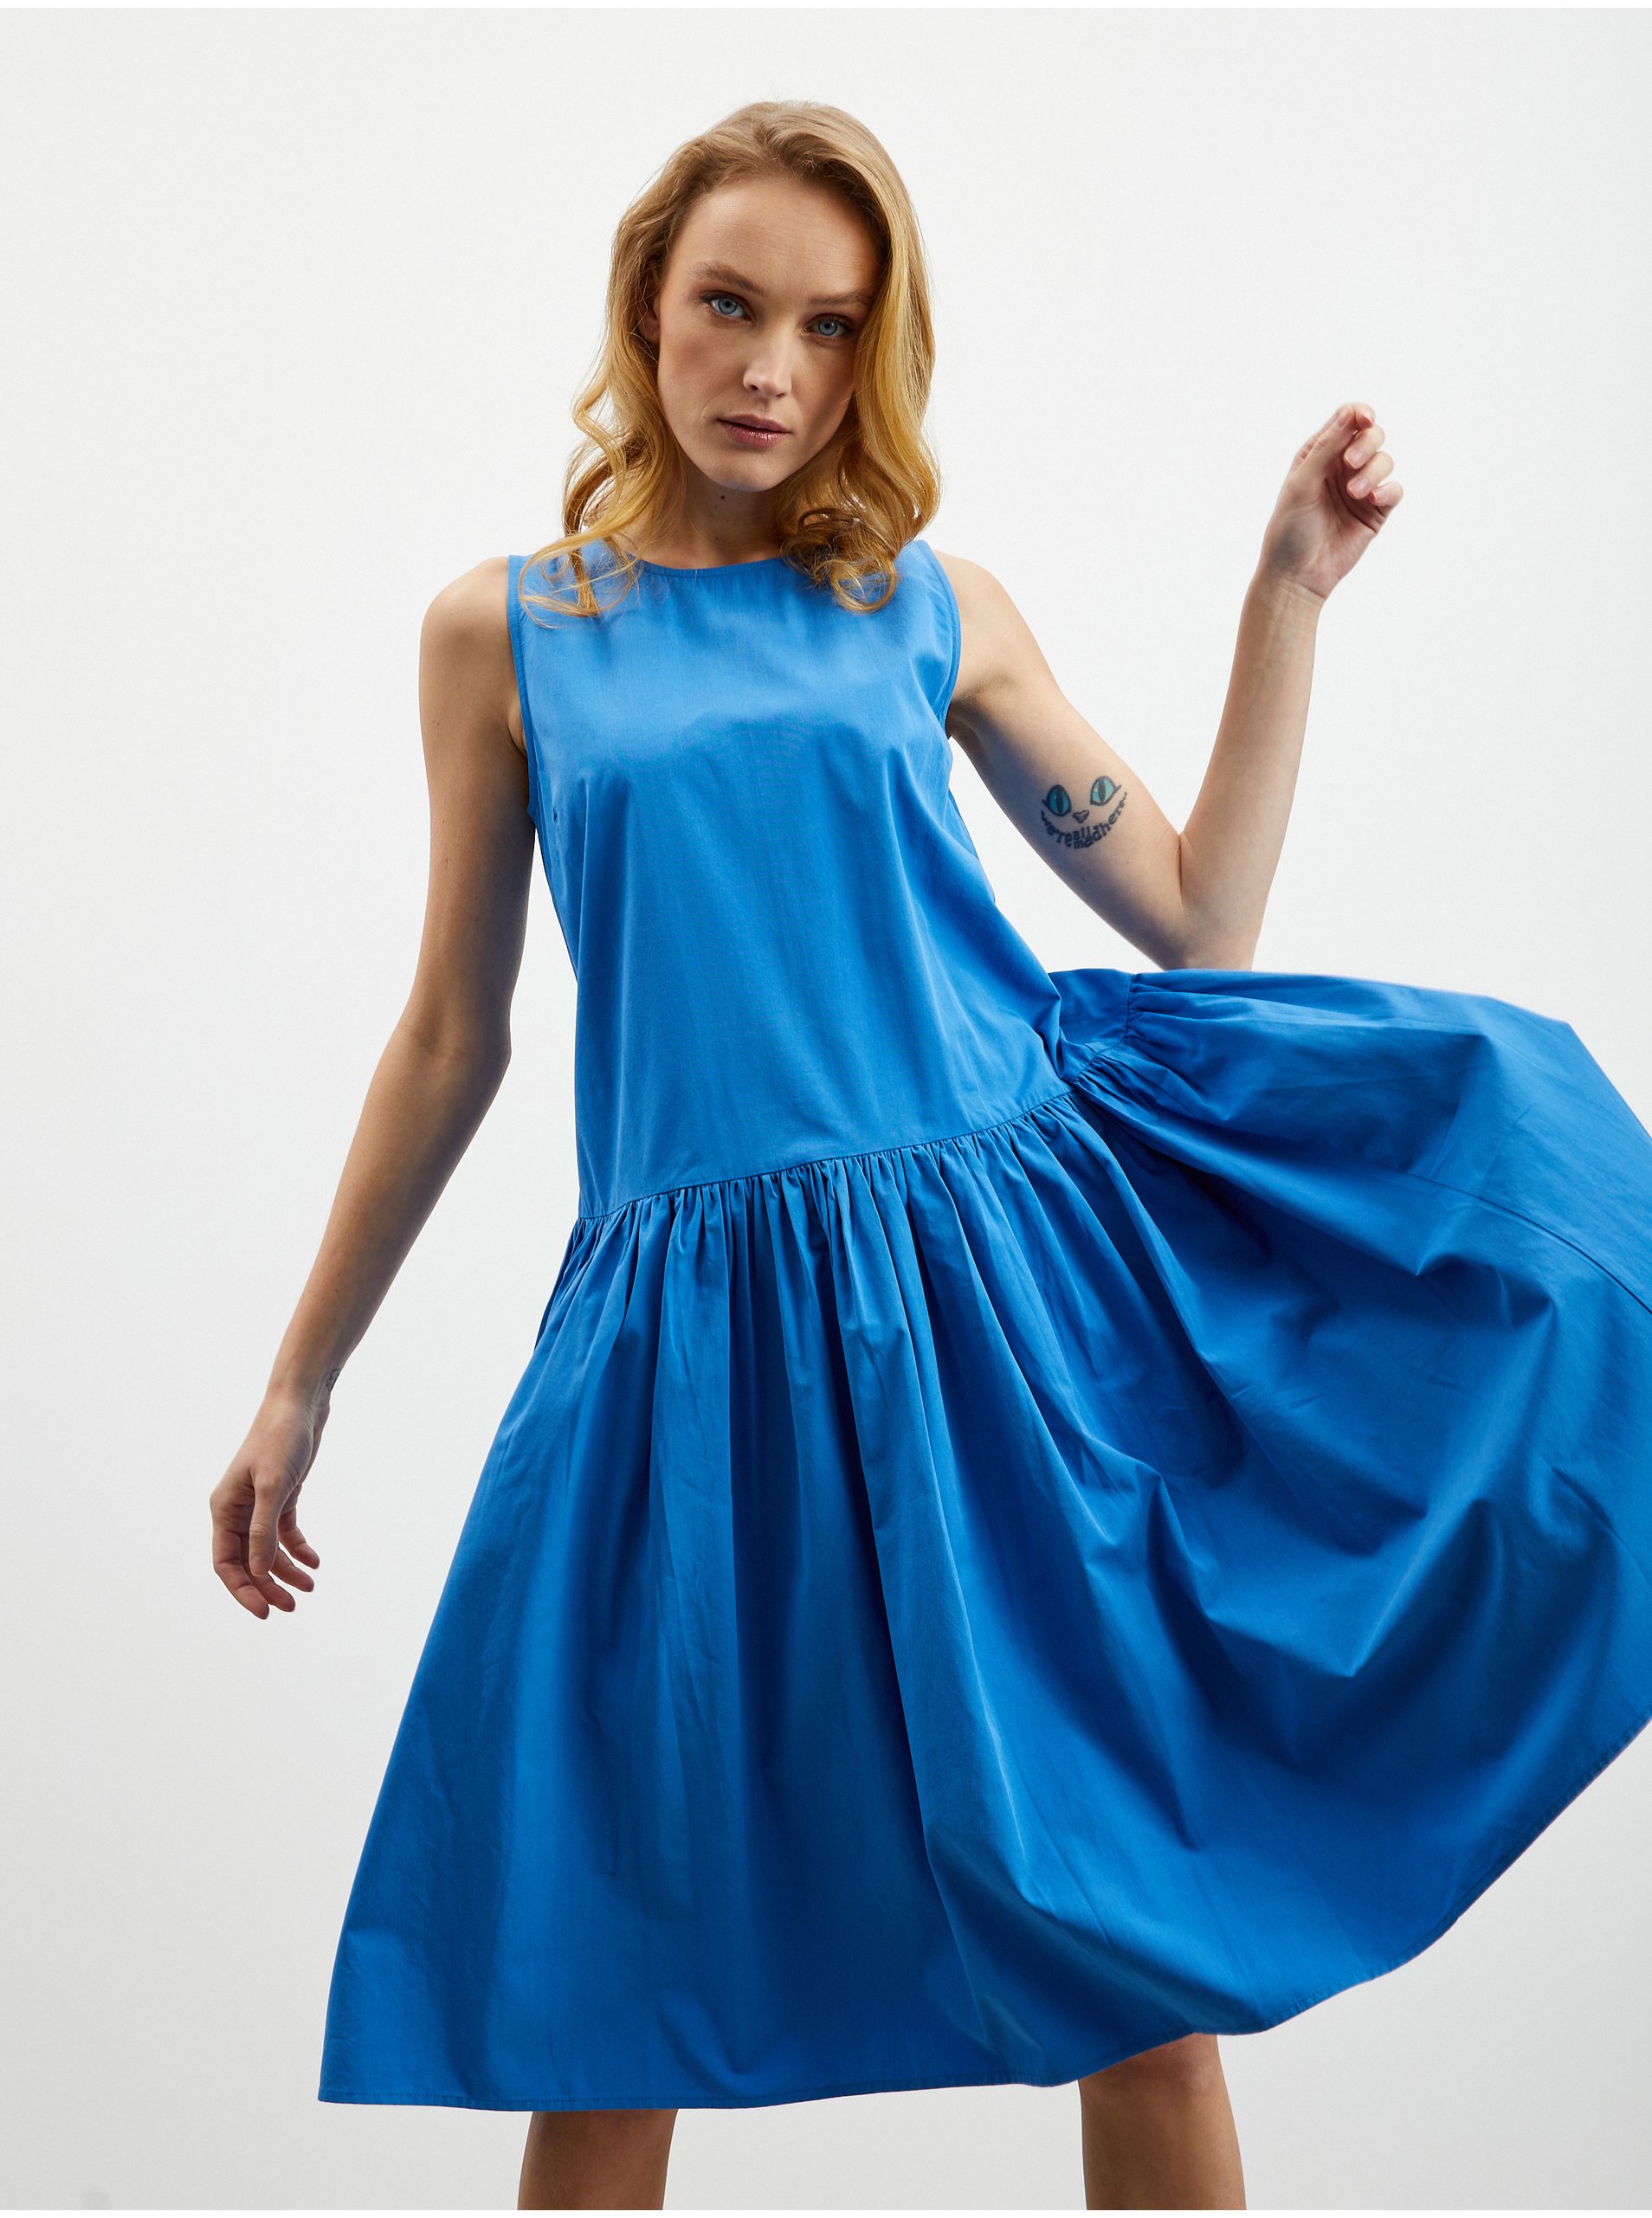 Lacno Modré dámske šaty s volánom ZOOT.lab Urbana